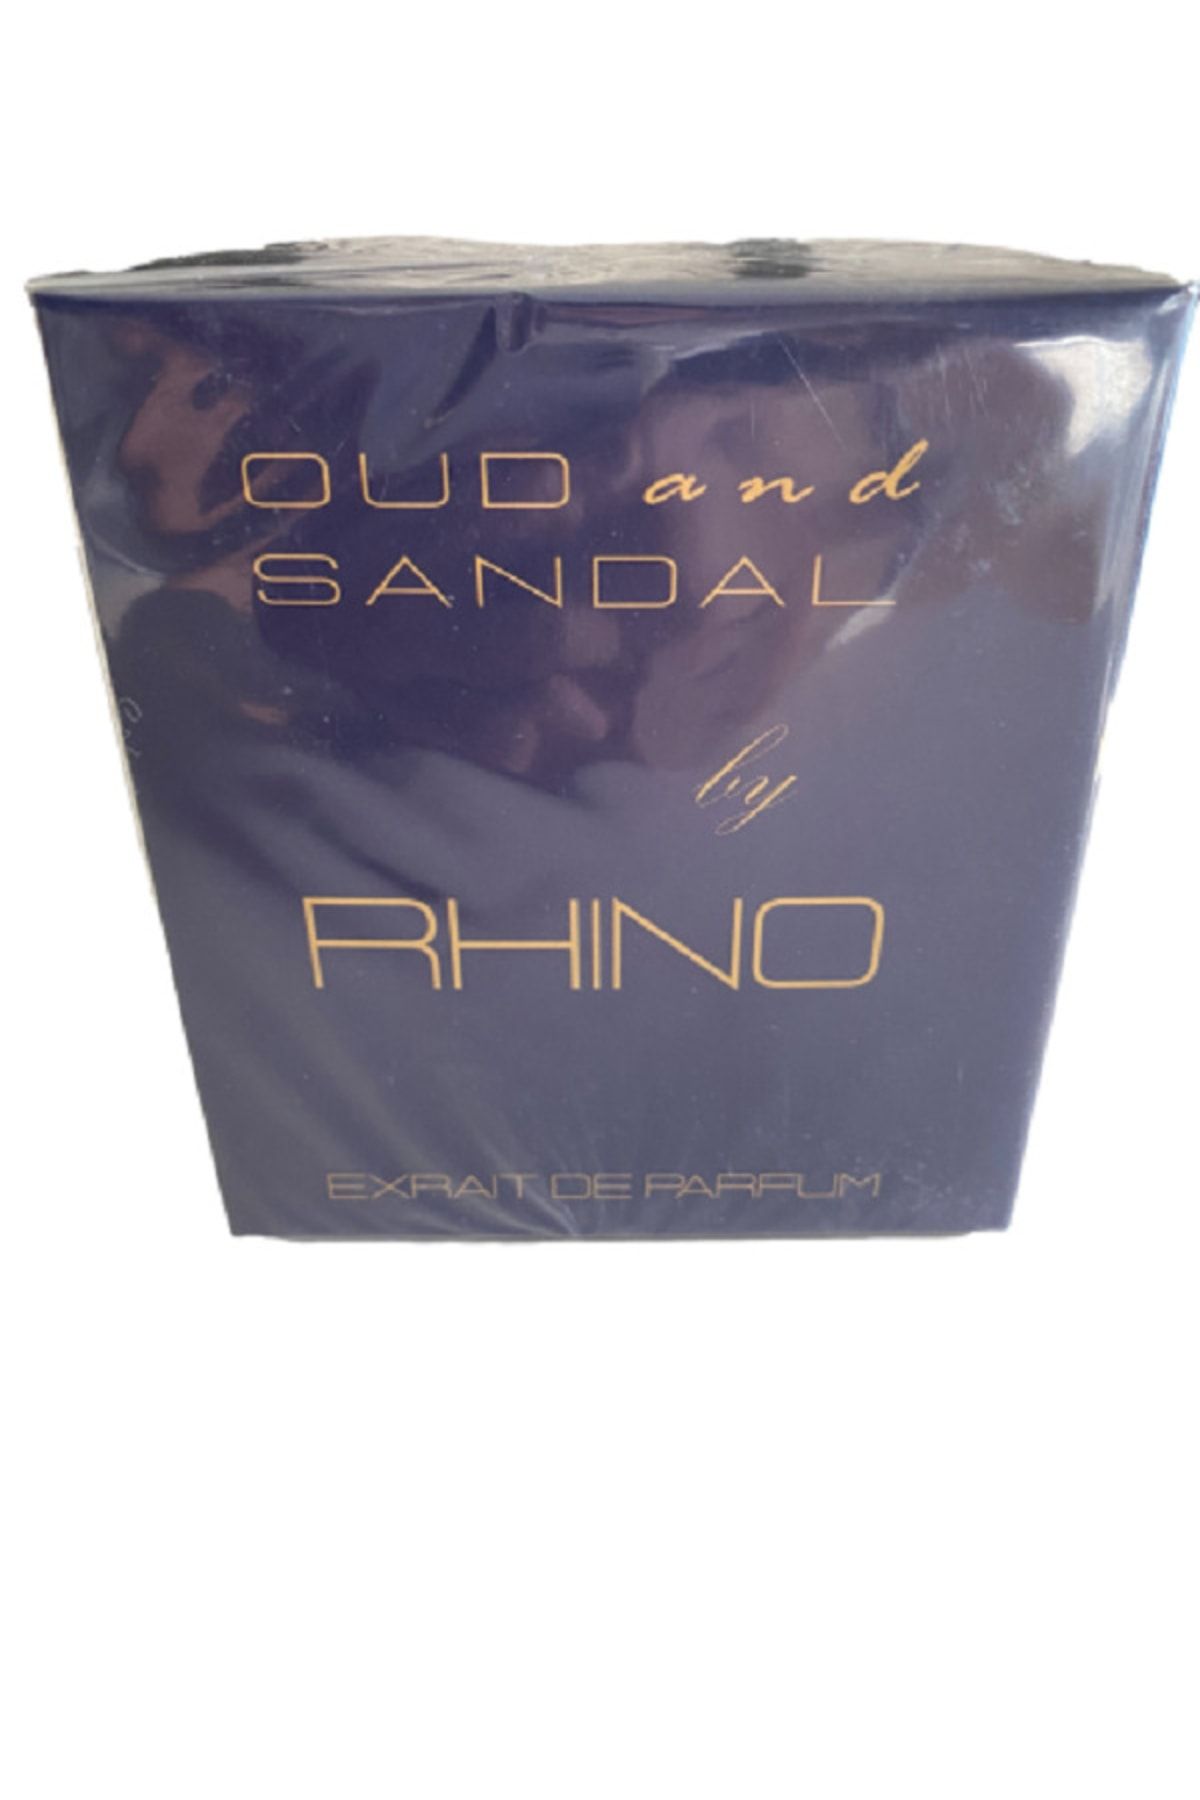 Rhino Atastore Erkek Parfüm 100cc Sandal Odunsu